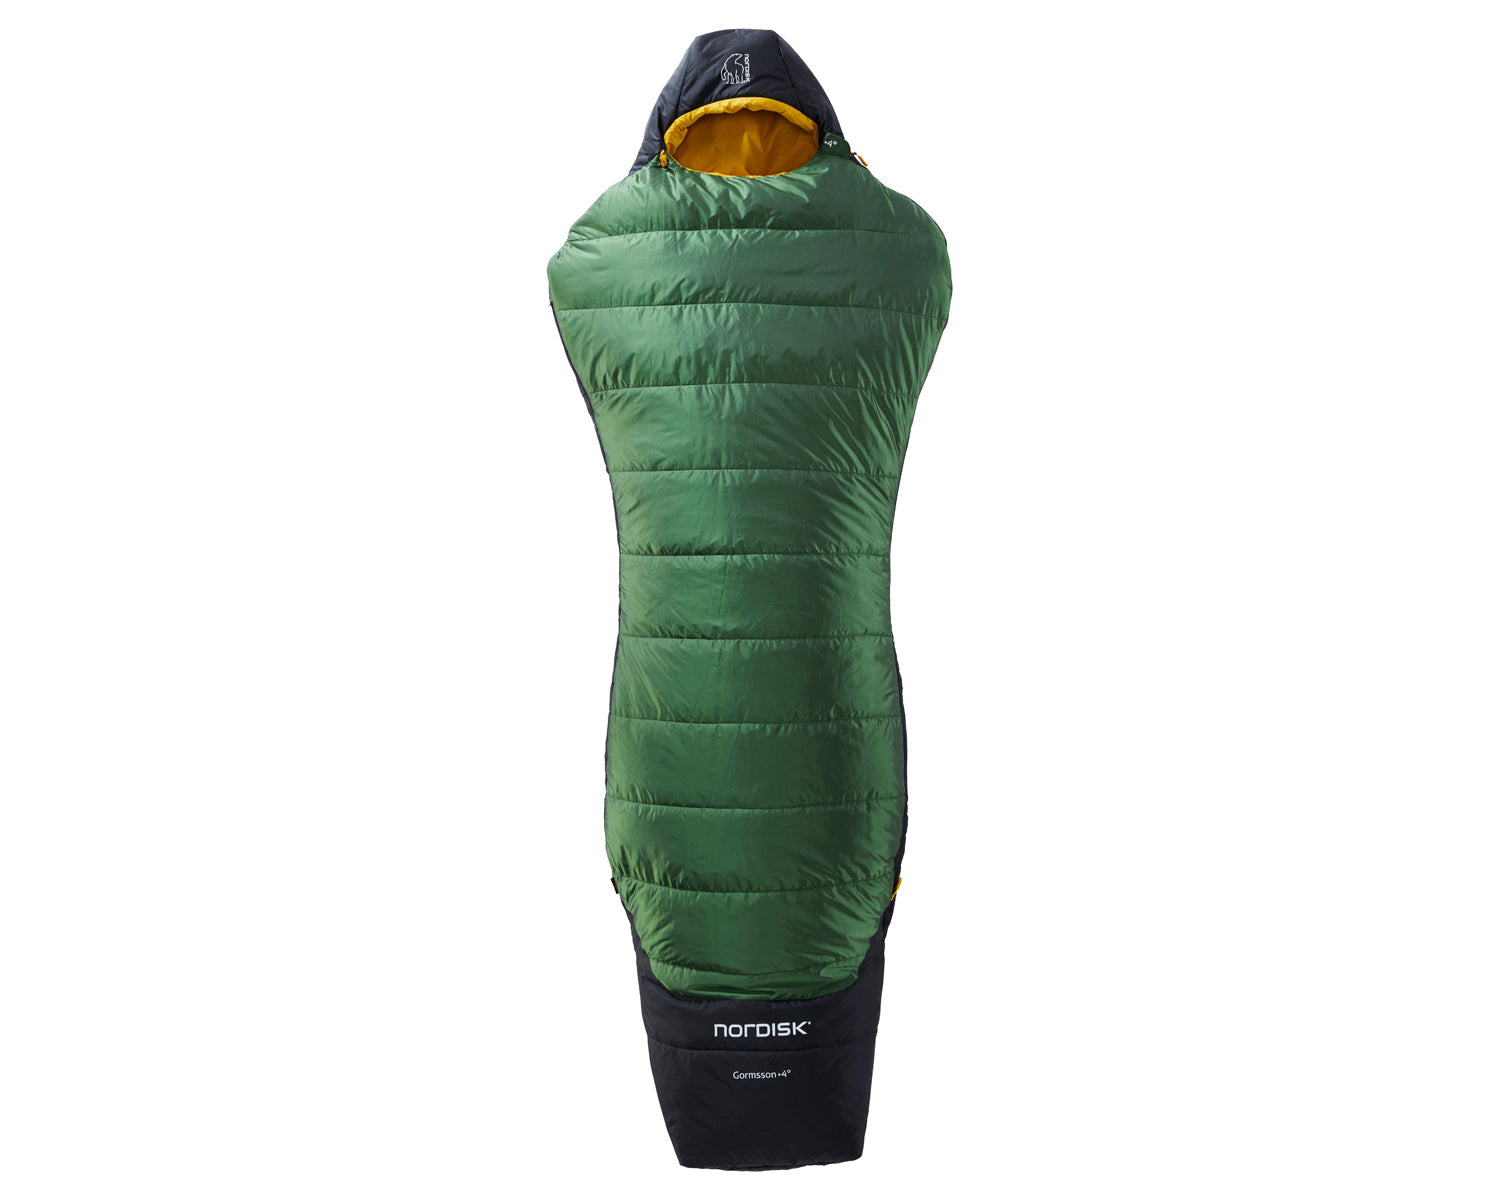 Gormsson +4° Curve sleeping bag - Artichoke Green/Mustard Yellow/Black